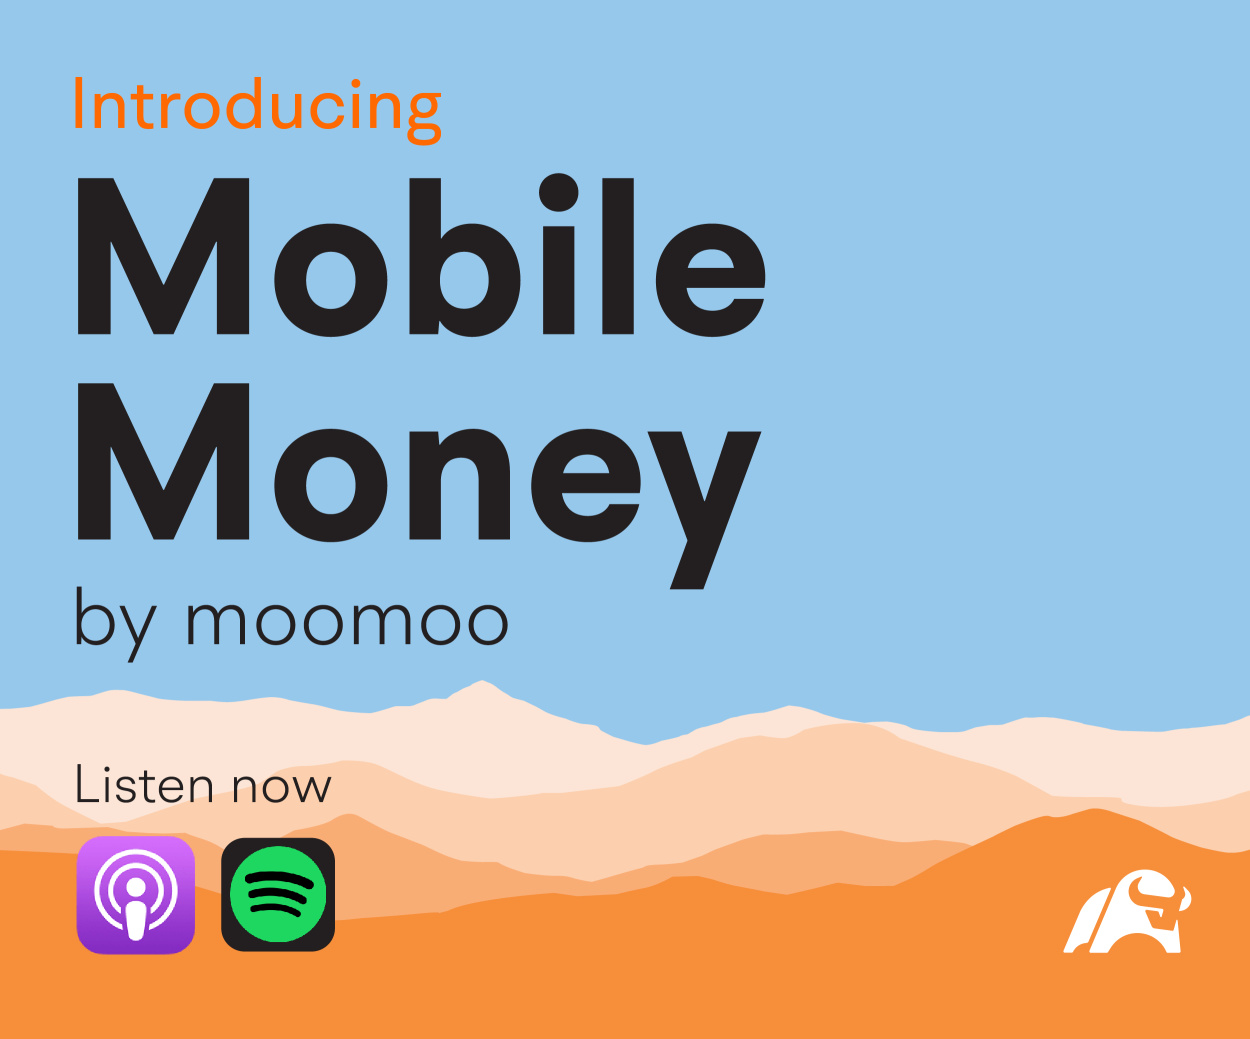 Tune into moomoo's new podcast: Mobile Money by moomoo